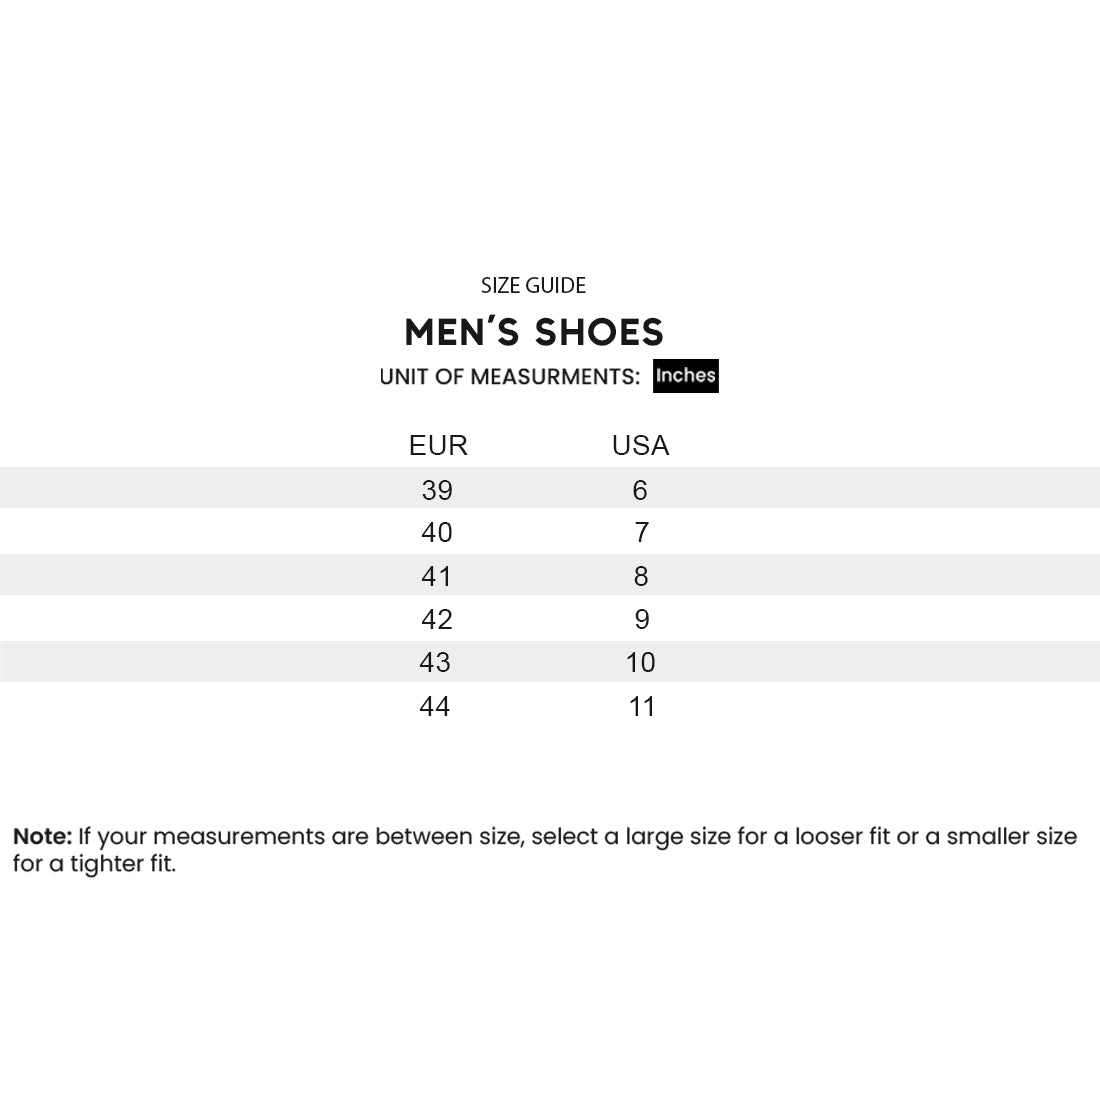 MS06 Men's Formal Shoes Pumps Dark Brown